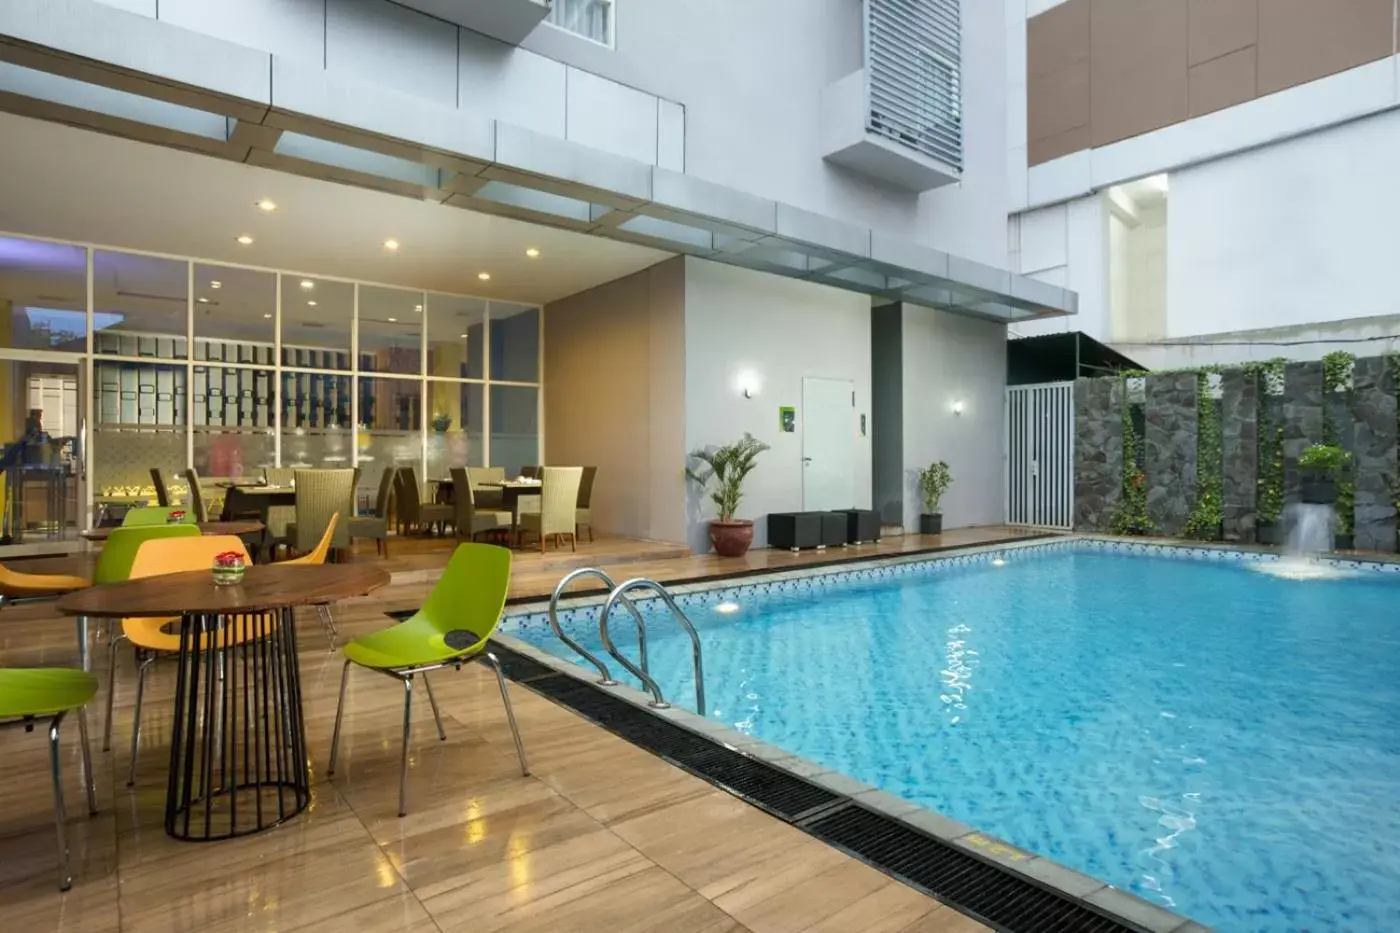 Swimming Pool in KHAS Semarang Hotel